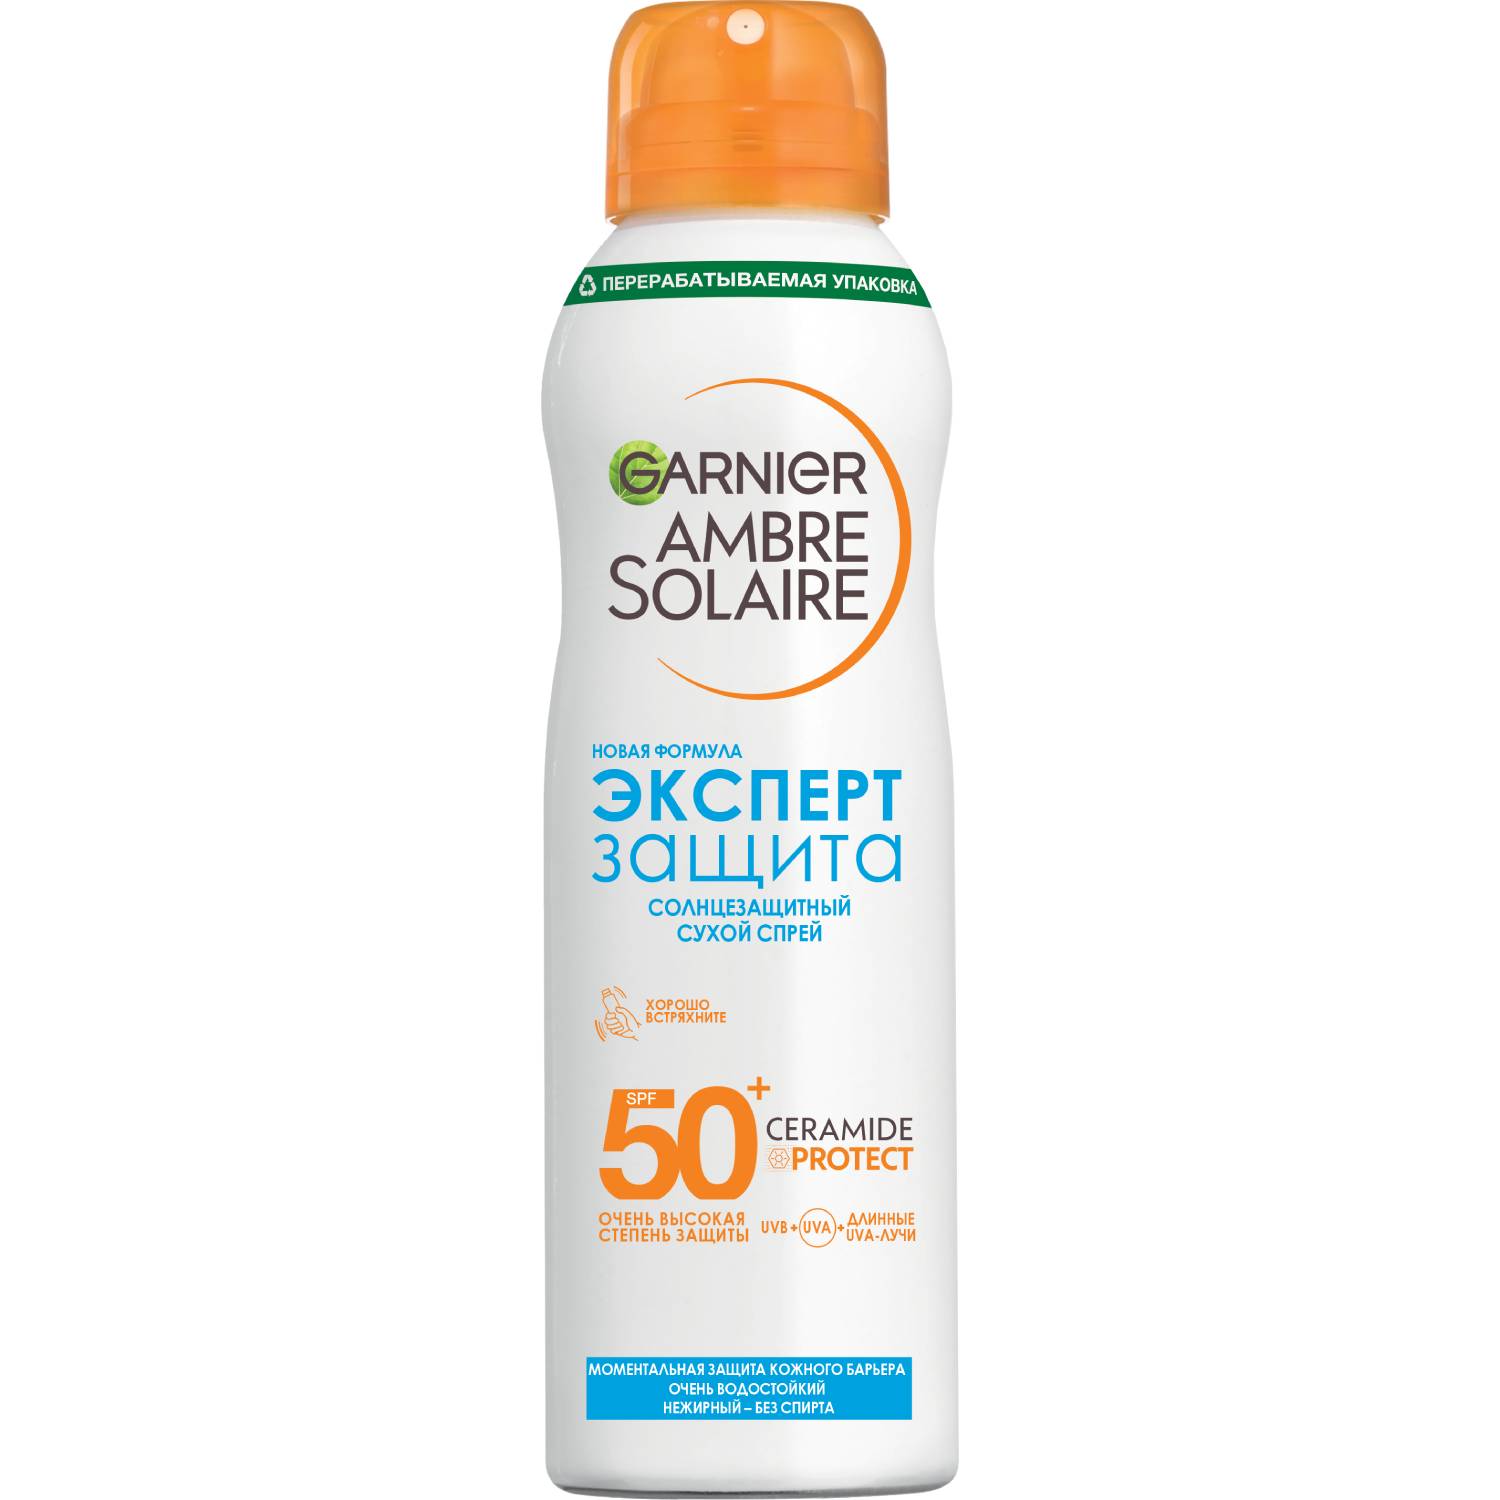 Garnier Солнцезащитный сухой спрей Эксперт защита SPF50+, 150 мл (Garnier, Amber solaire)